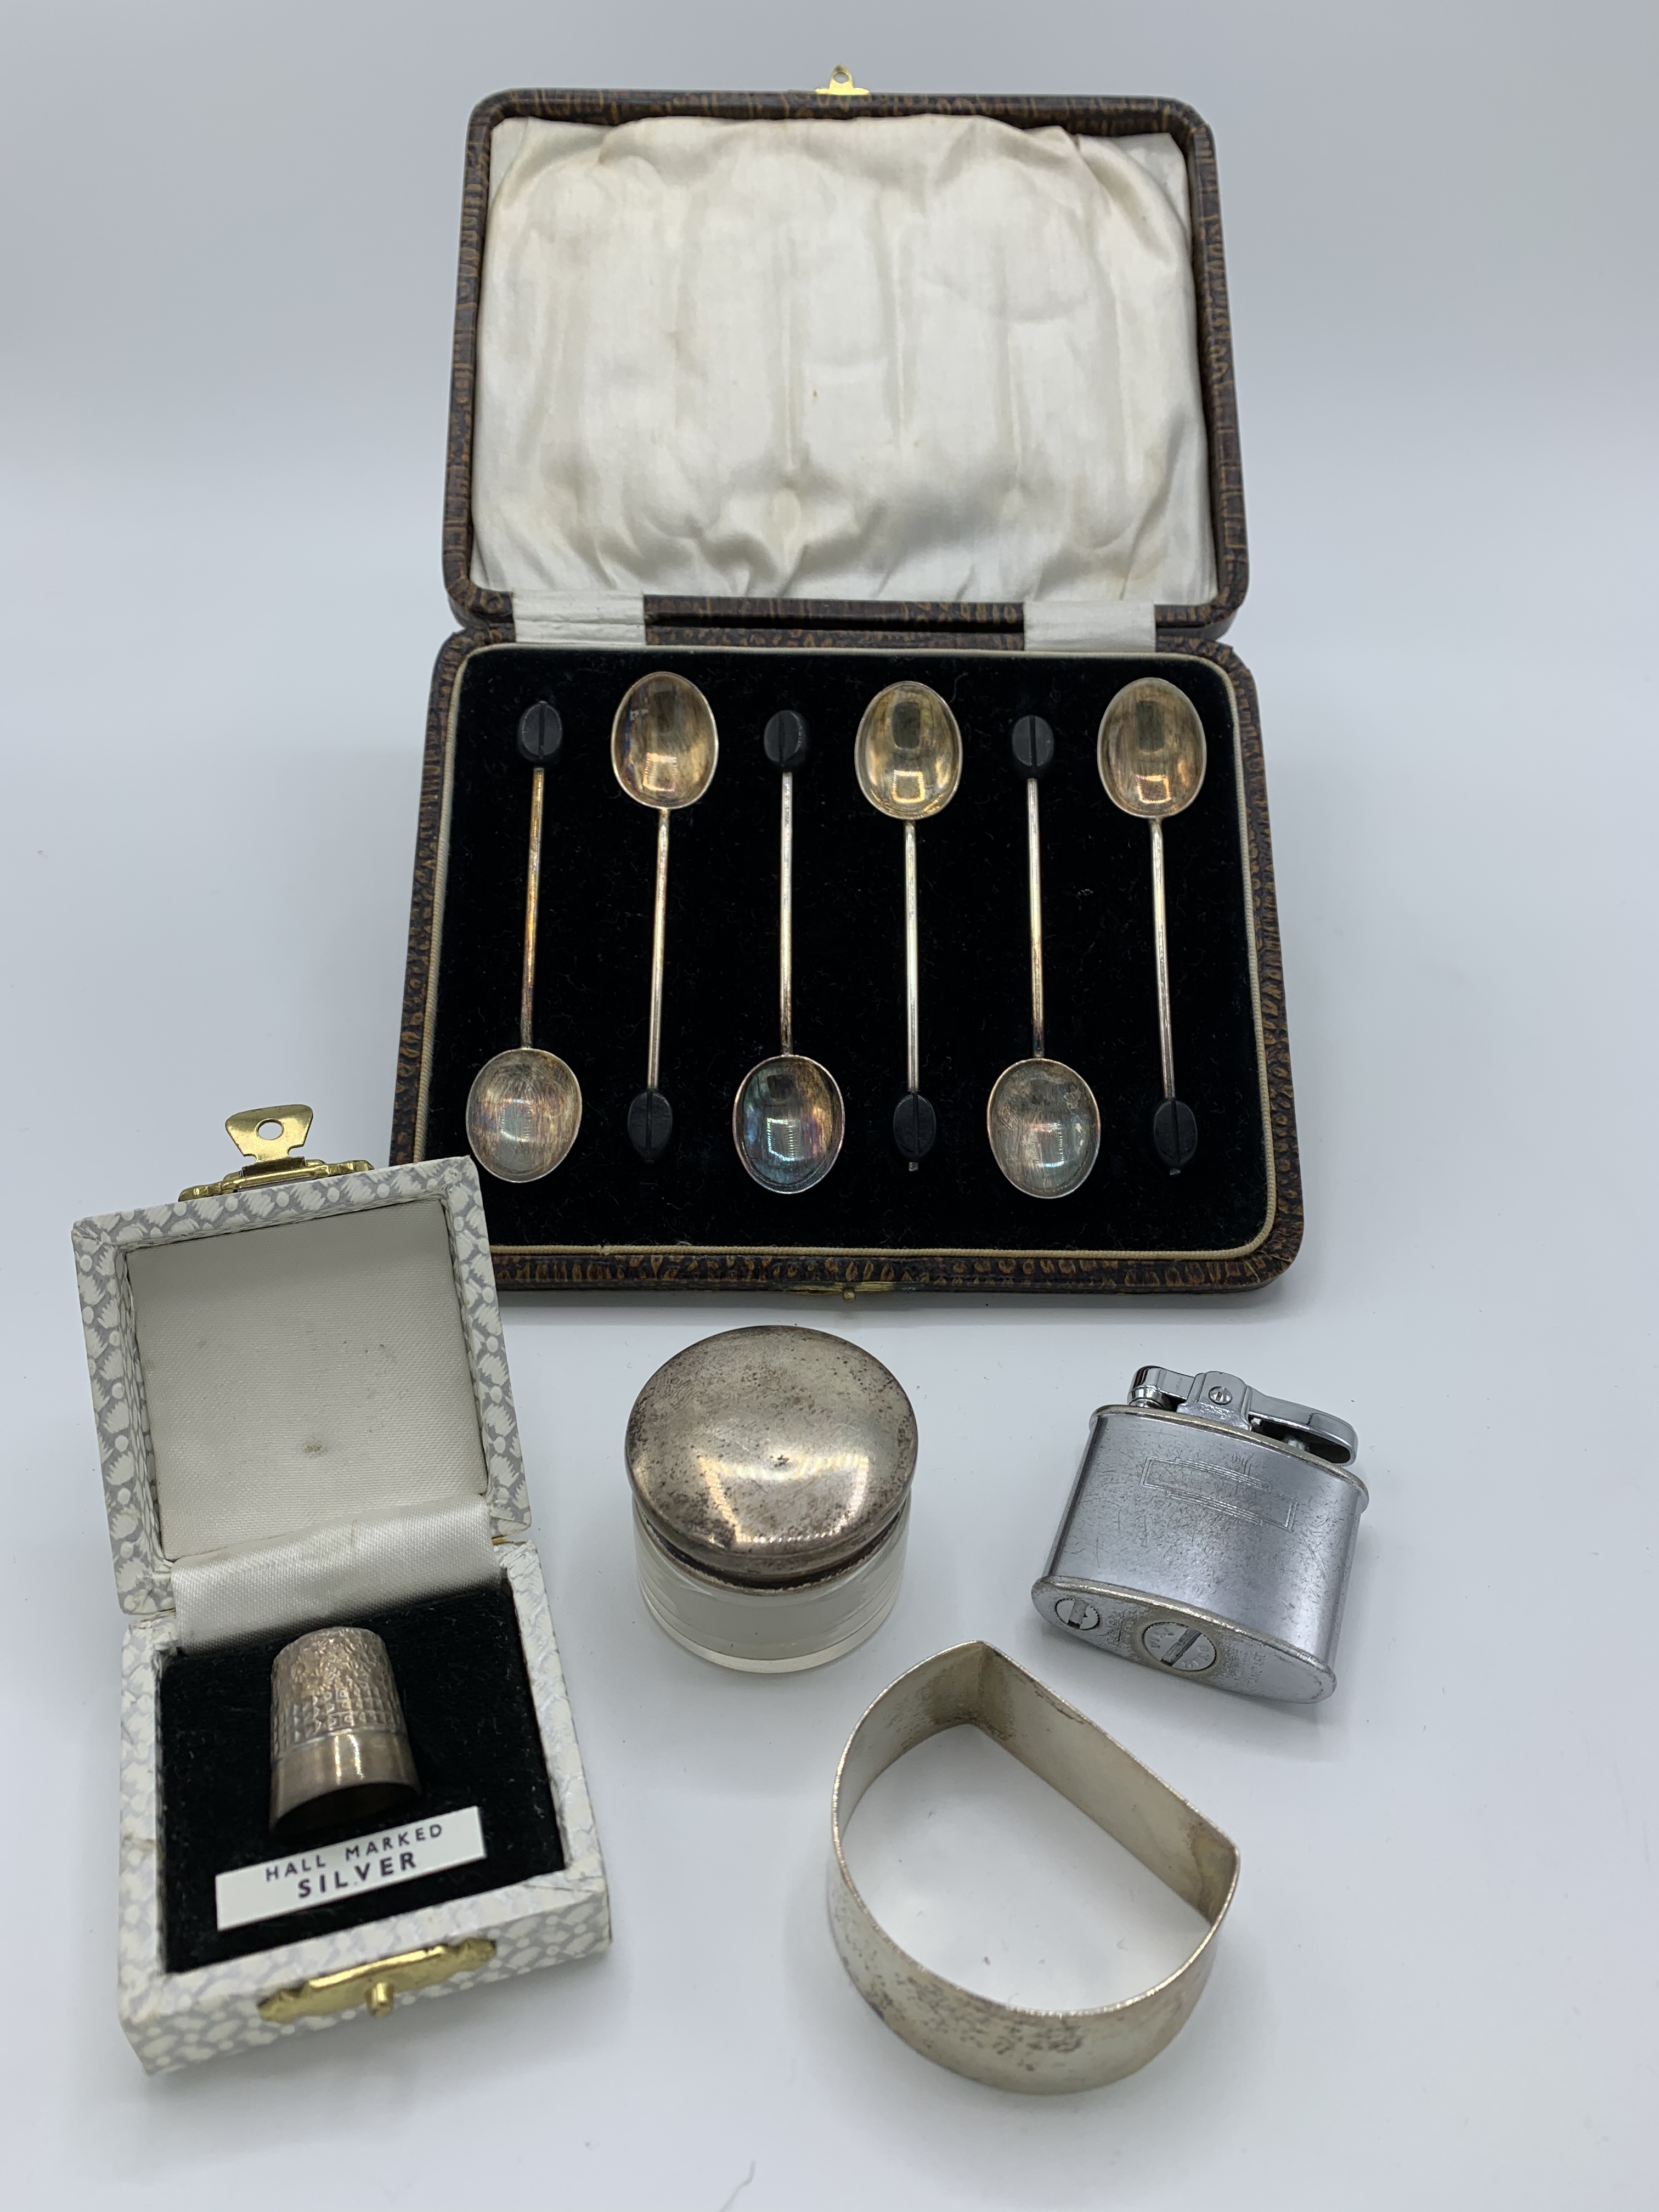 6 silver coffee bean spoons, Birmingham 1923 in case, silver napkin ring, silver thimble, silver